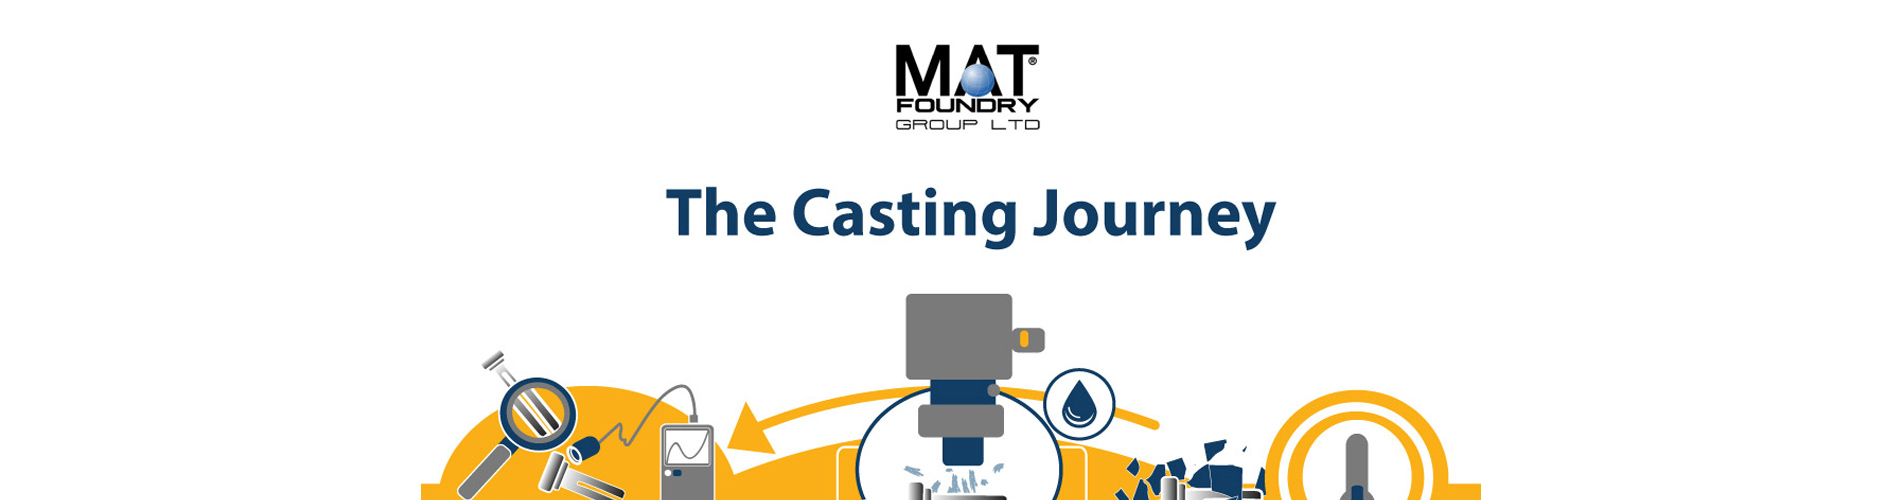 Casting Journey Hub Listing - MAT Foundry